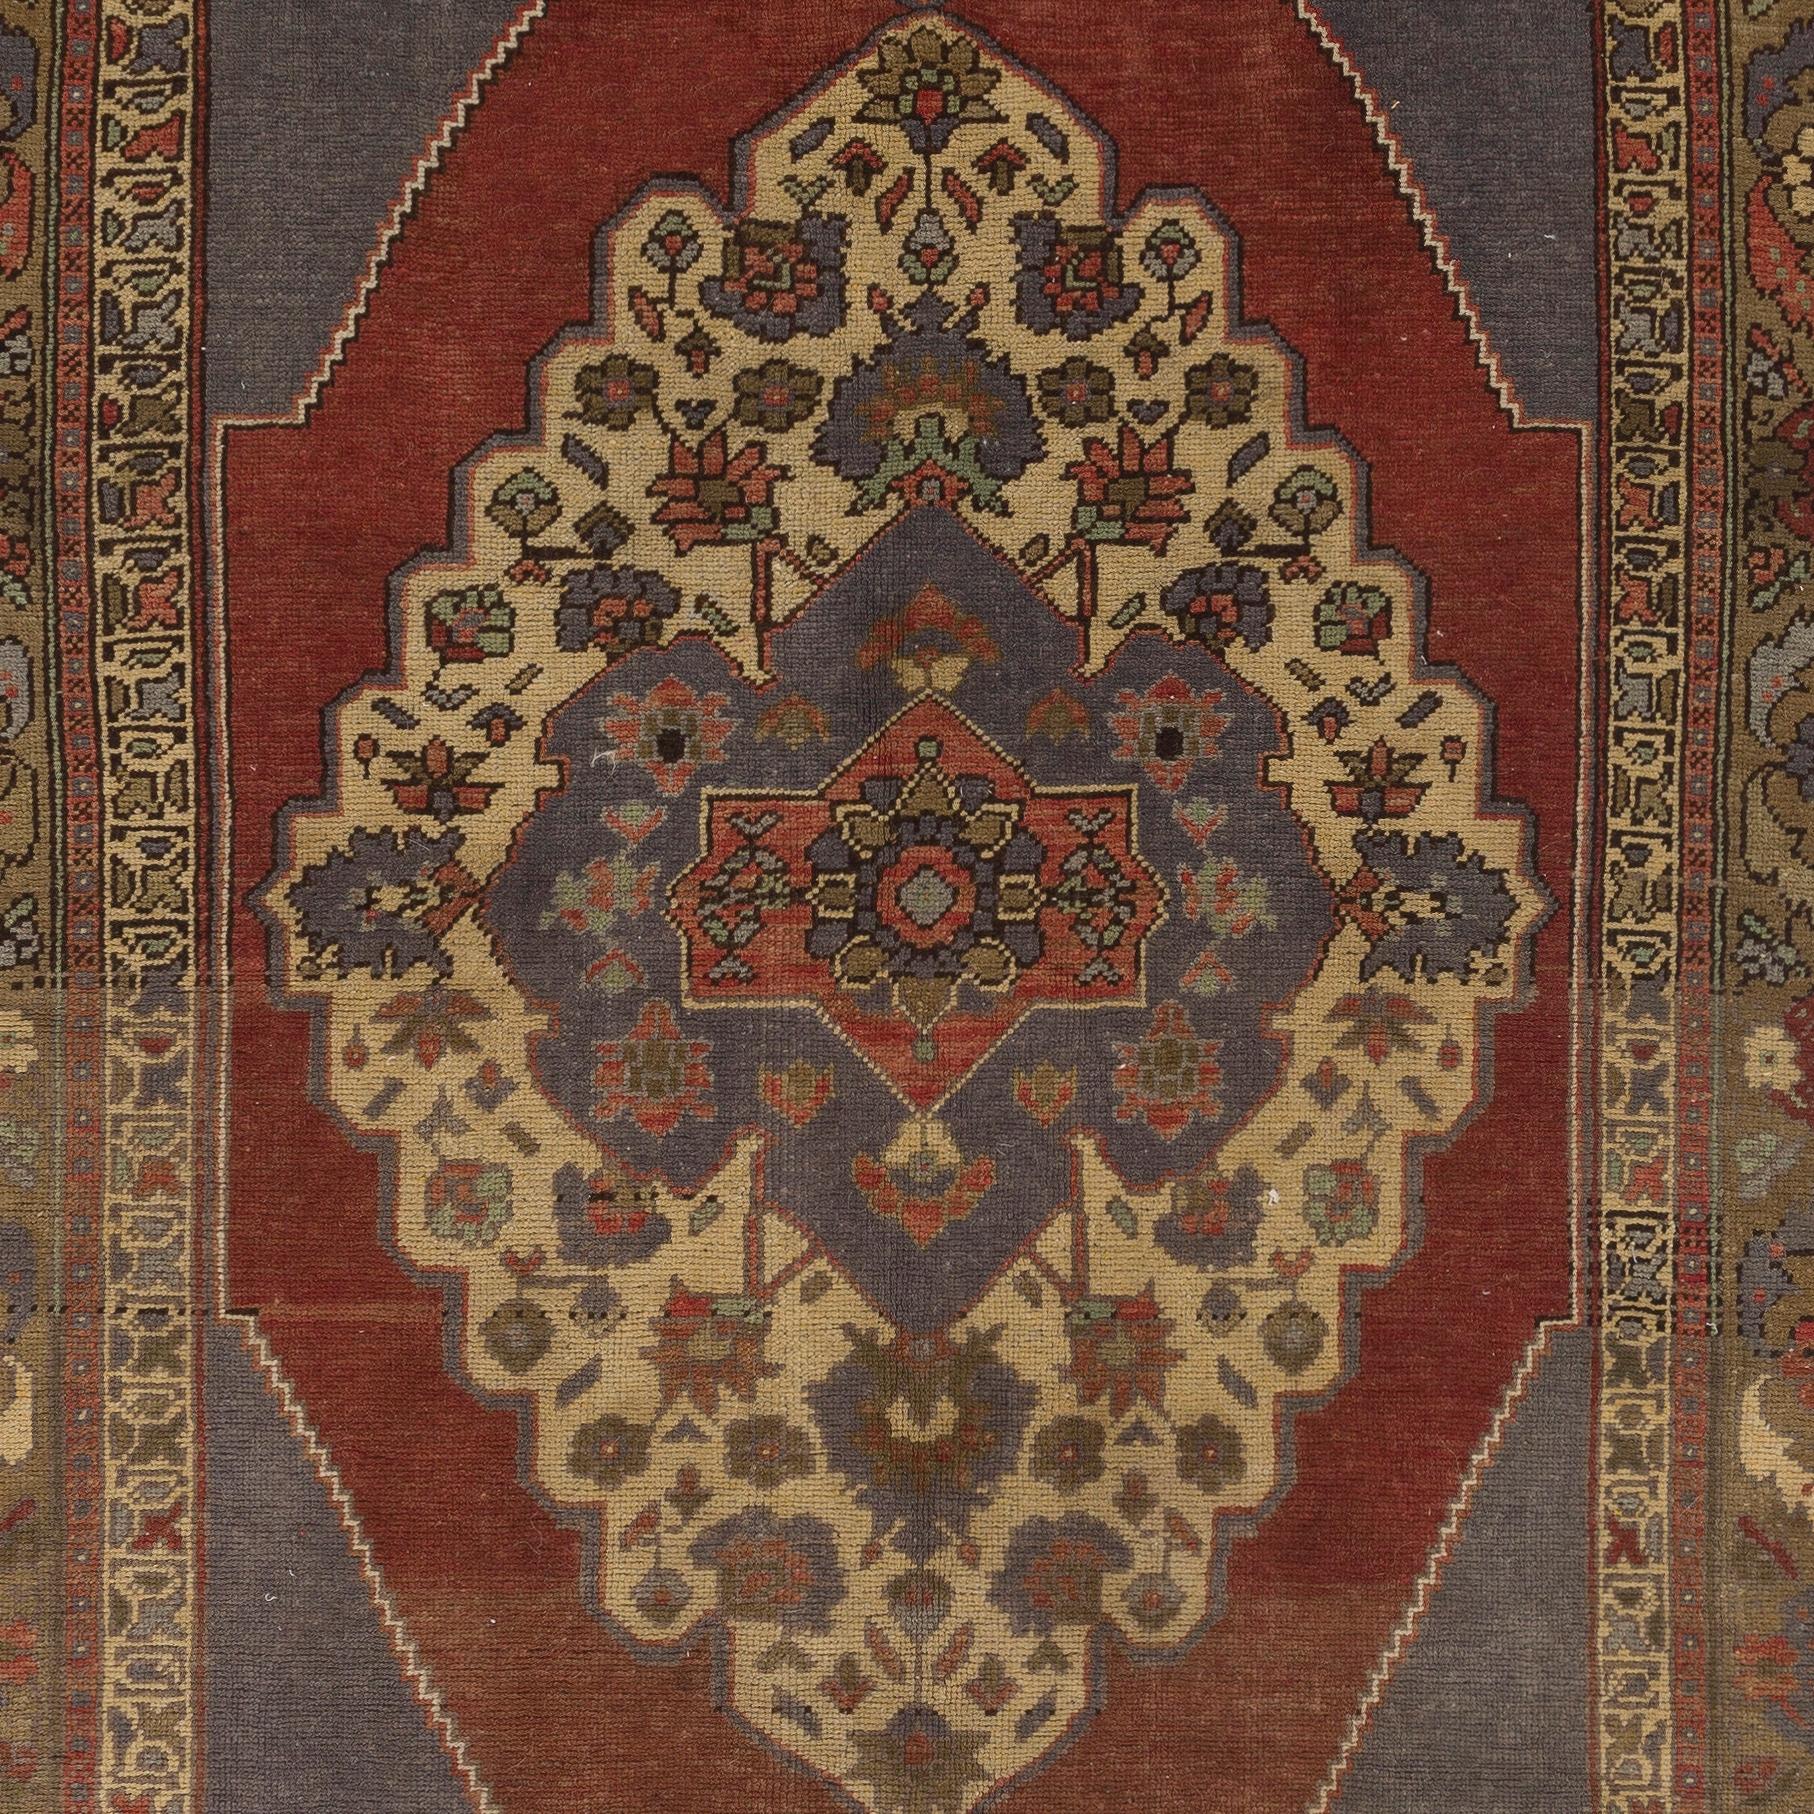 Rustic 5x9.4 Ft Handmade Turkish Village Rug. One of Kind Oriental Carpet, All Wool For Sale